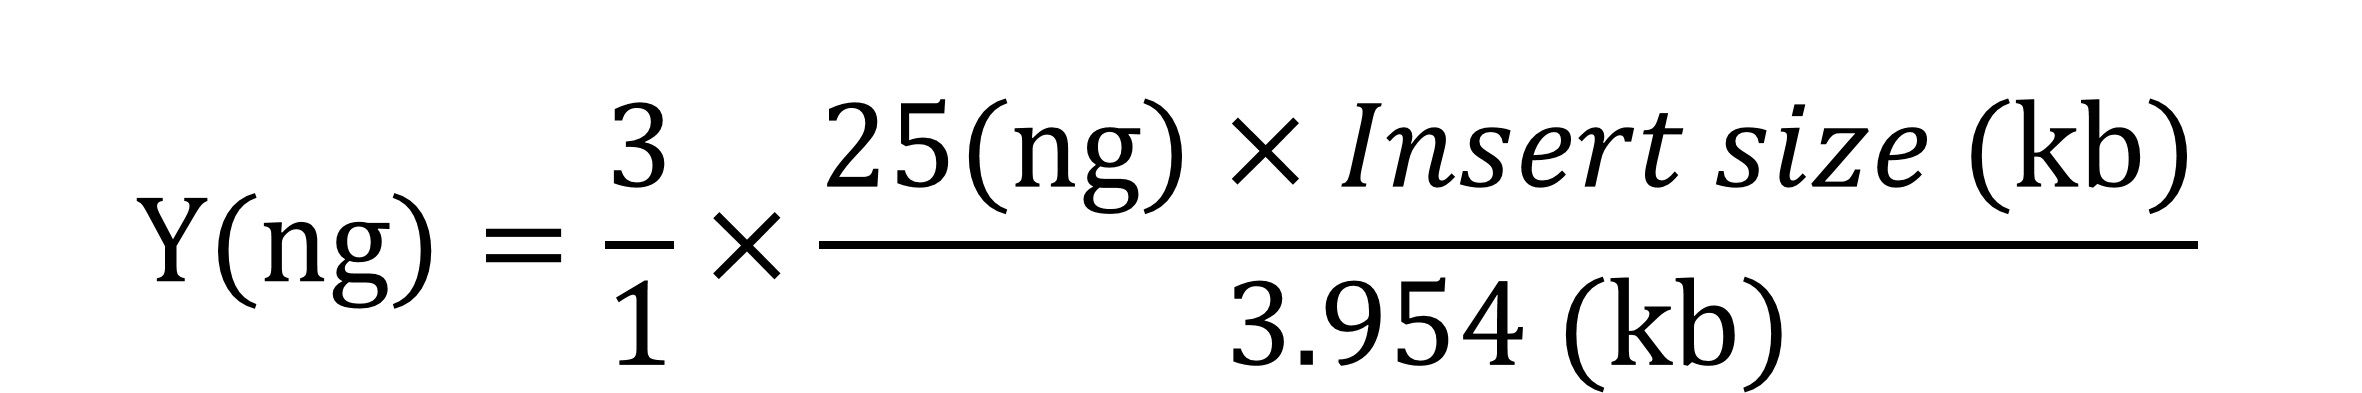 vector insert ligation ratio